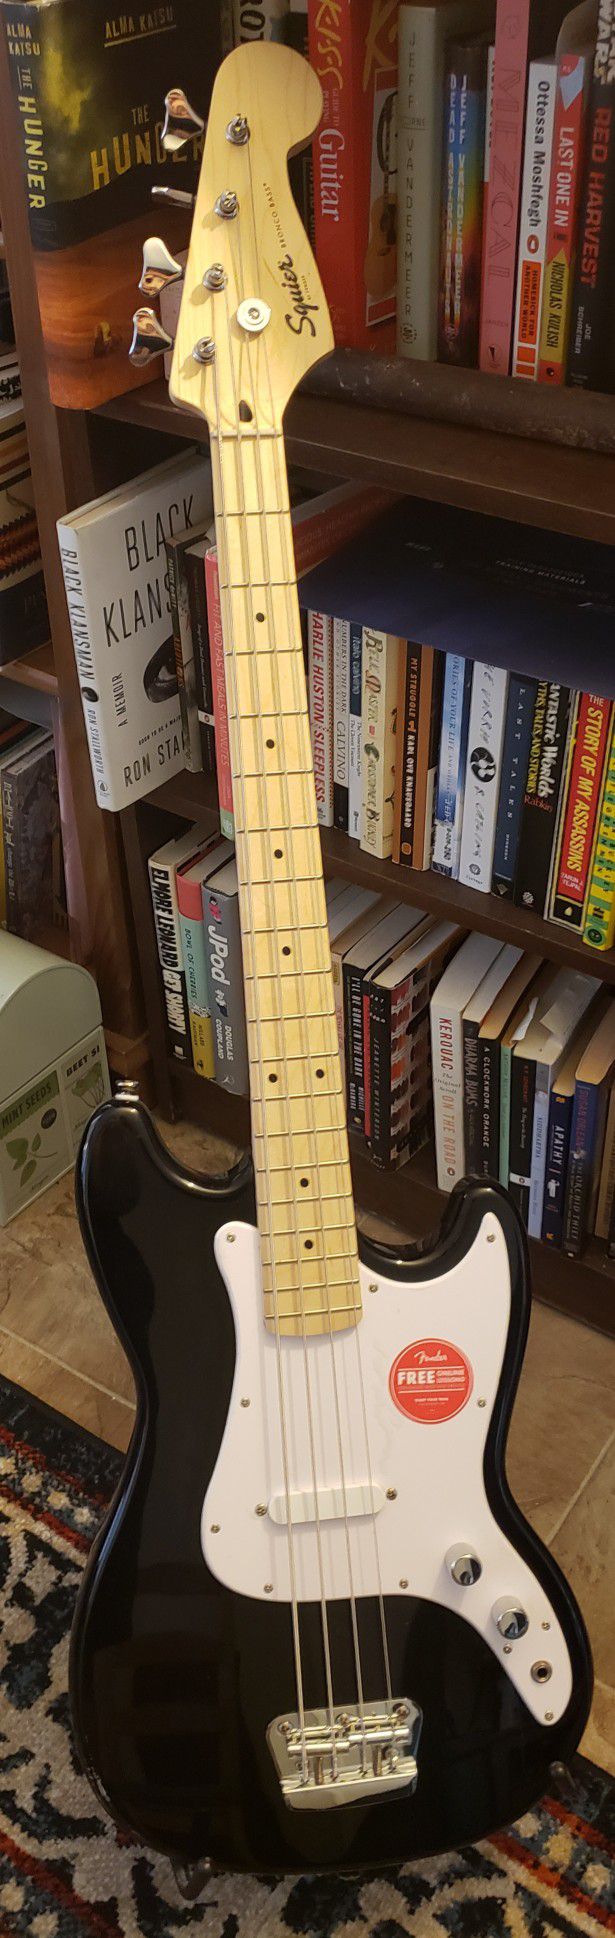 Squier Bronco Electric Bass Guitar